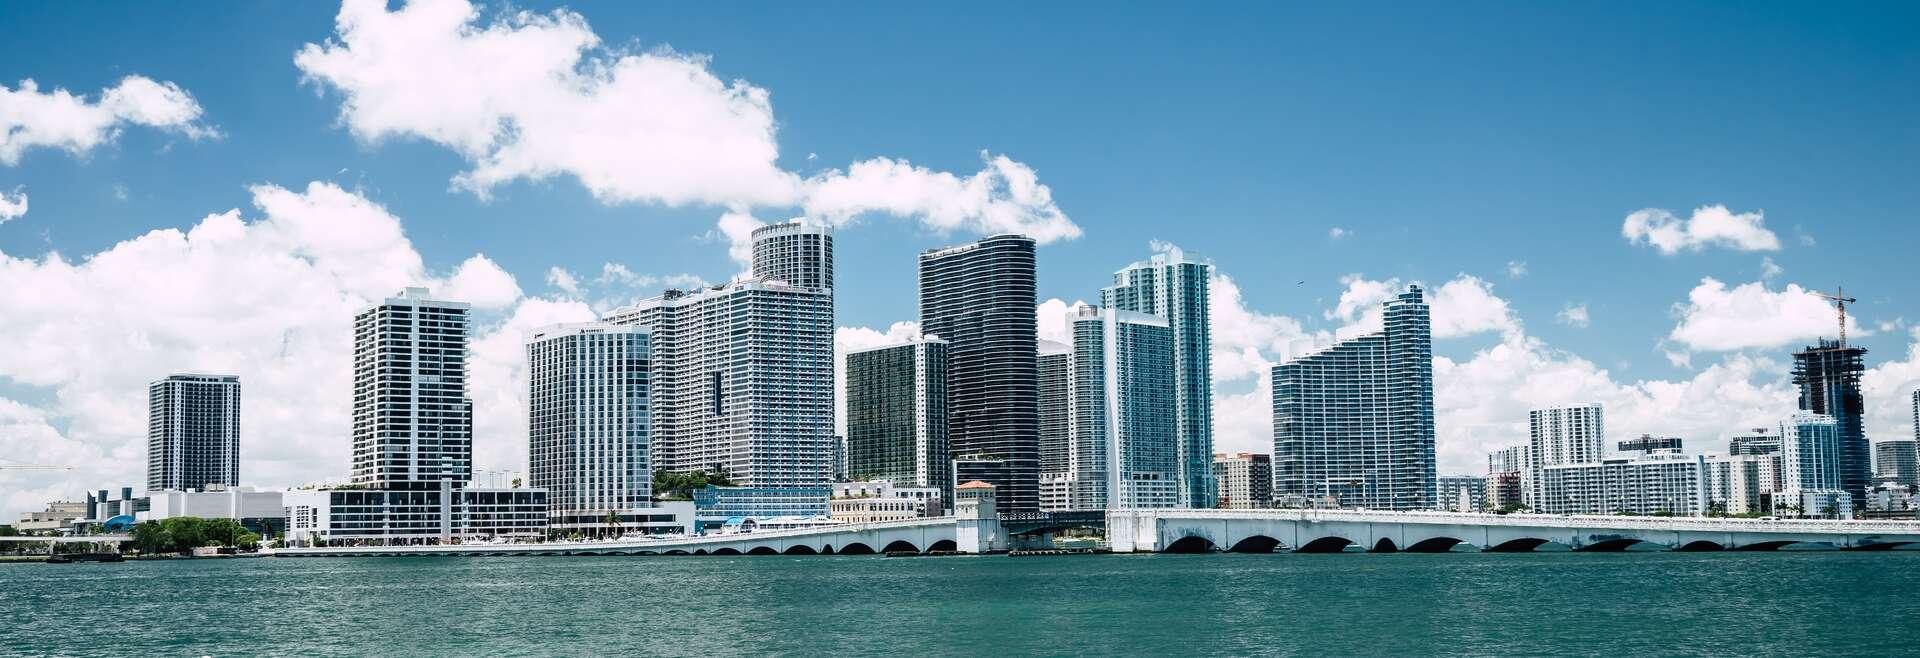 Sprachaufenthalt USA, Miami - Skyline